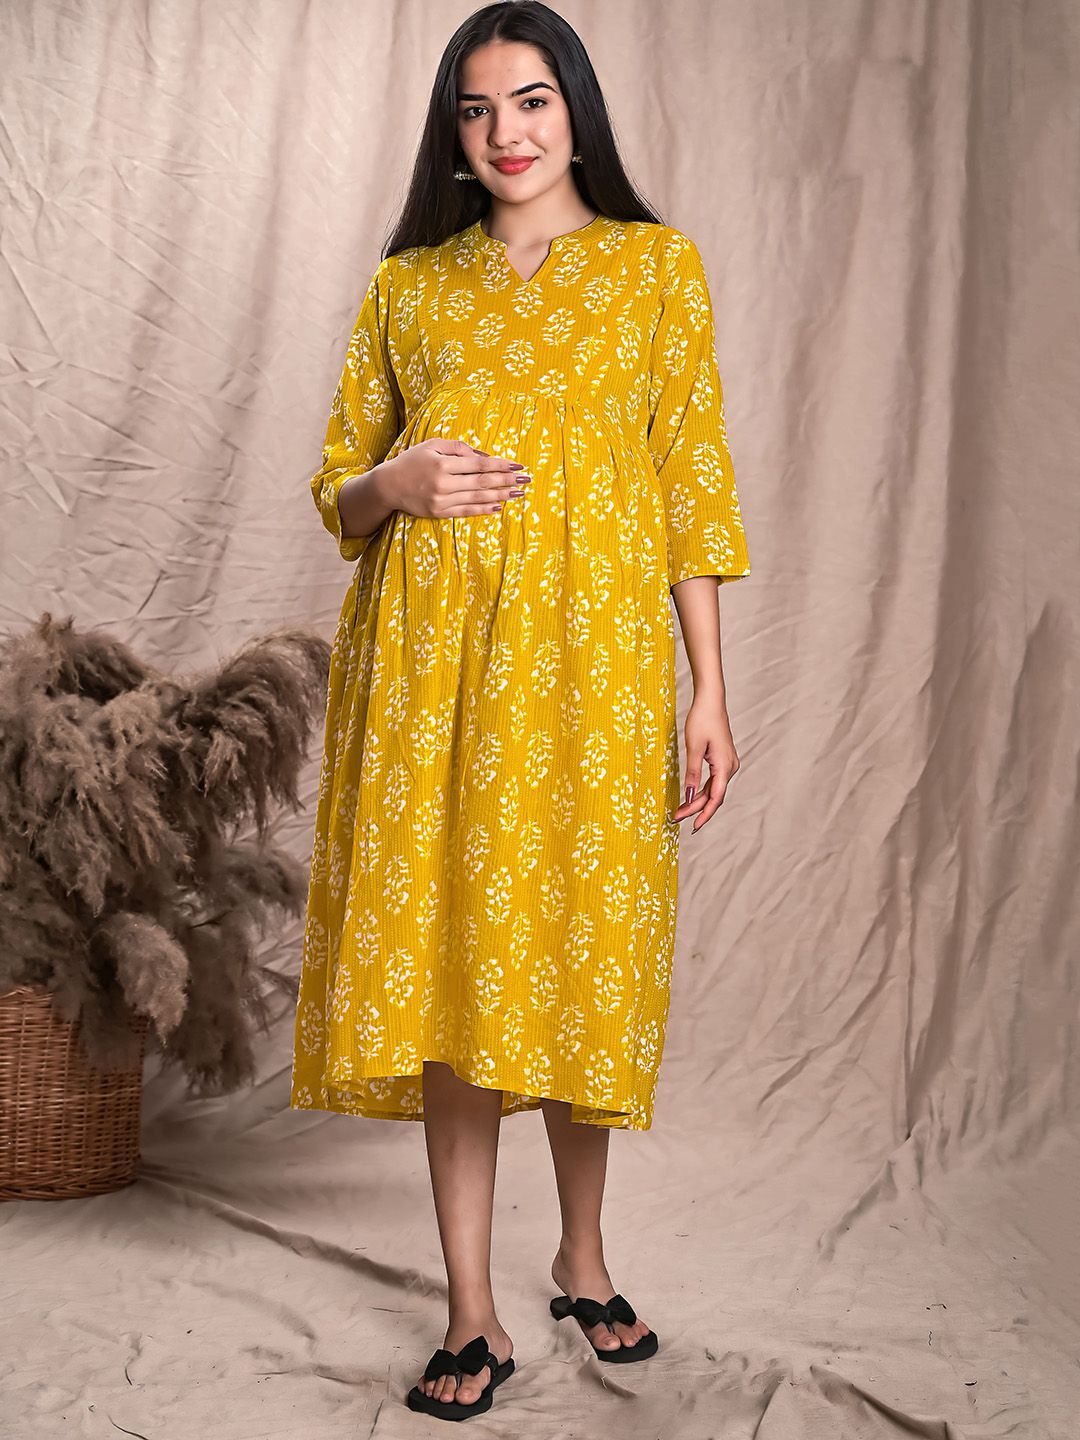 WEAVERS SAGA Ethnic Motifs Printed Pure Cotton Fit & Flared Maternity Midi Dress Price in India